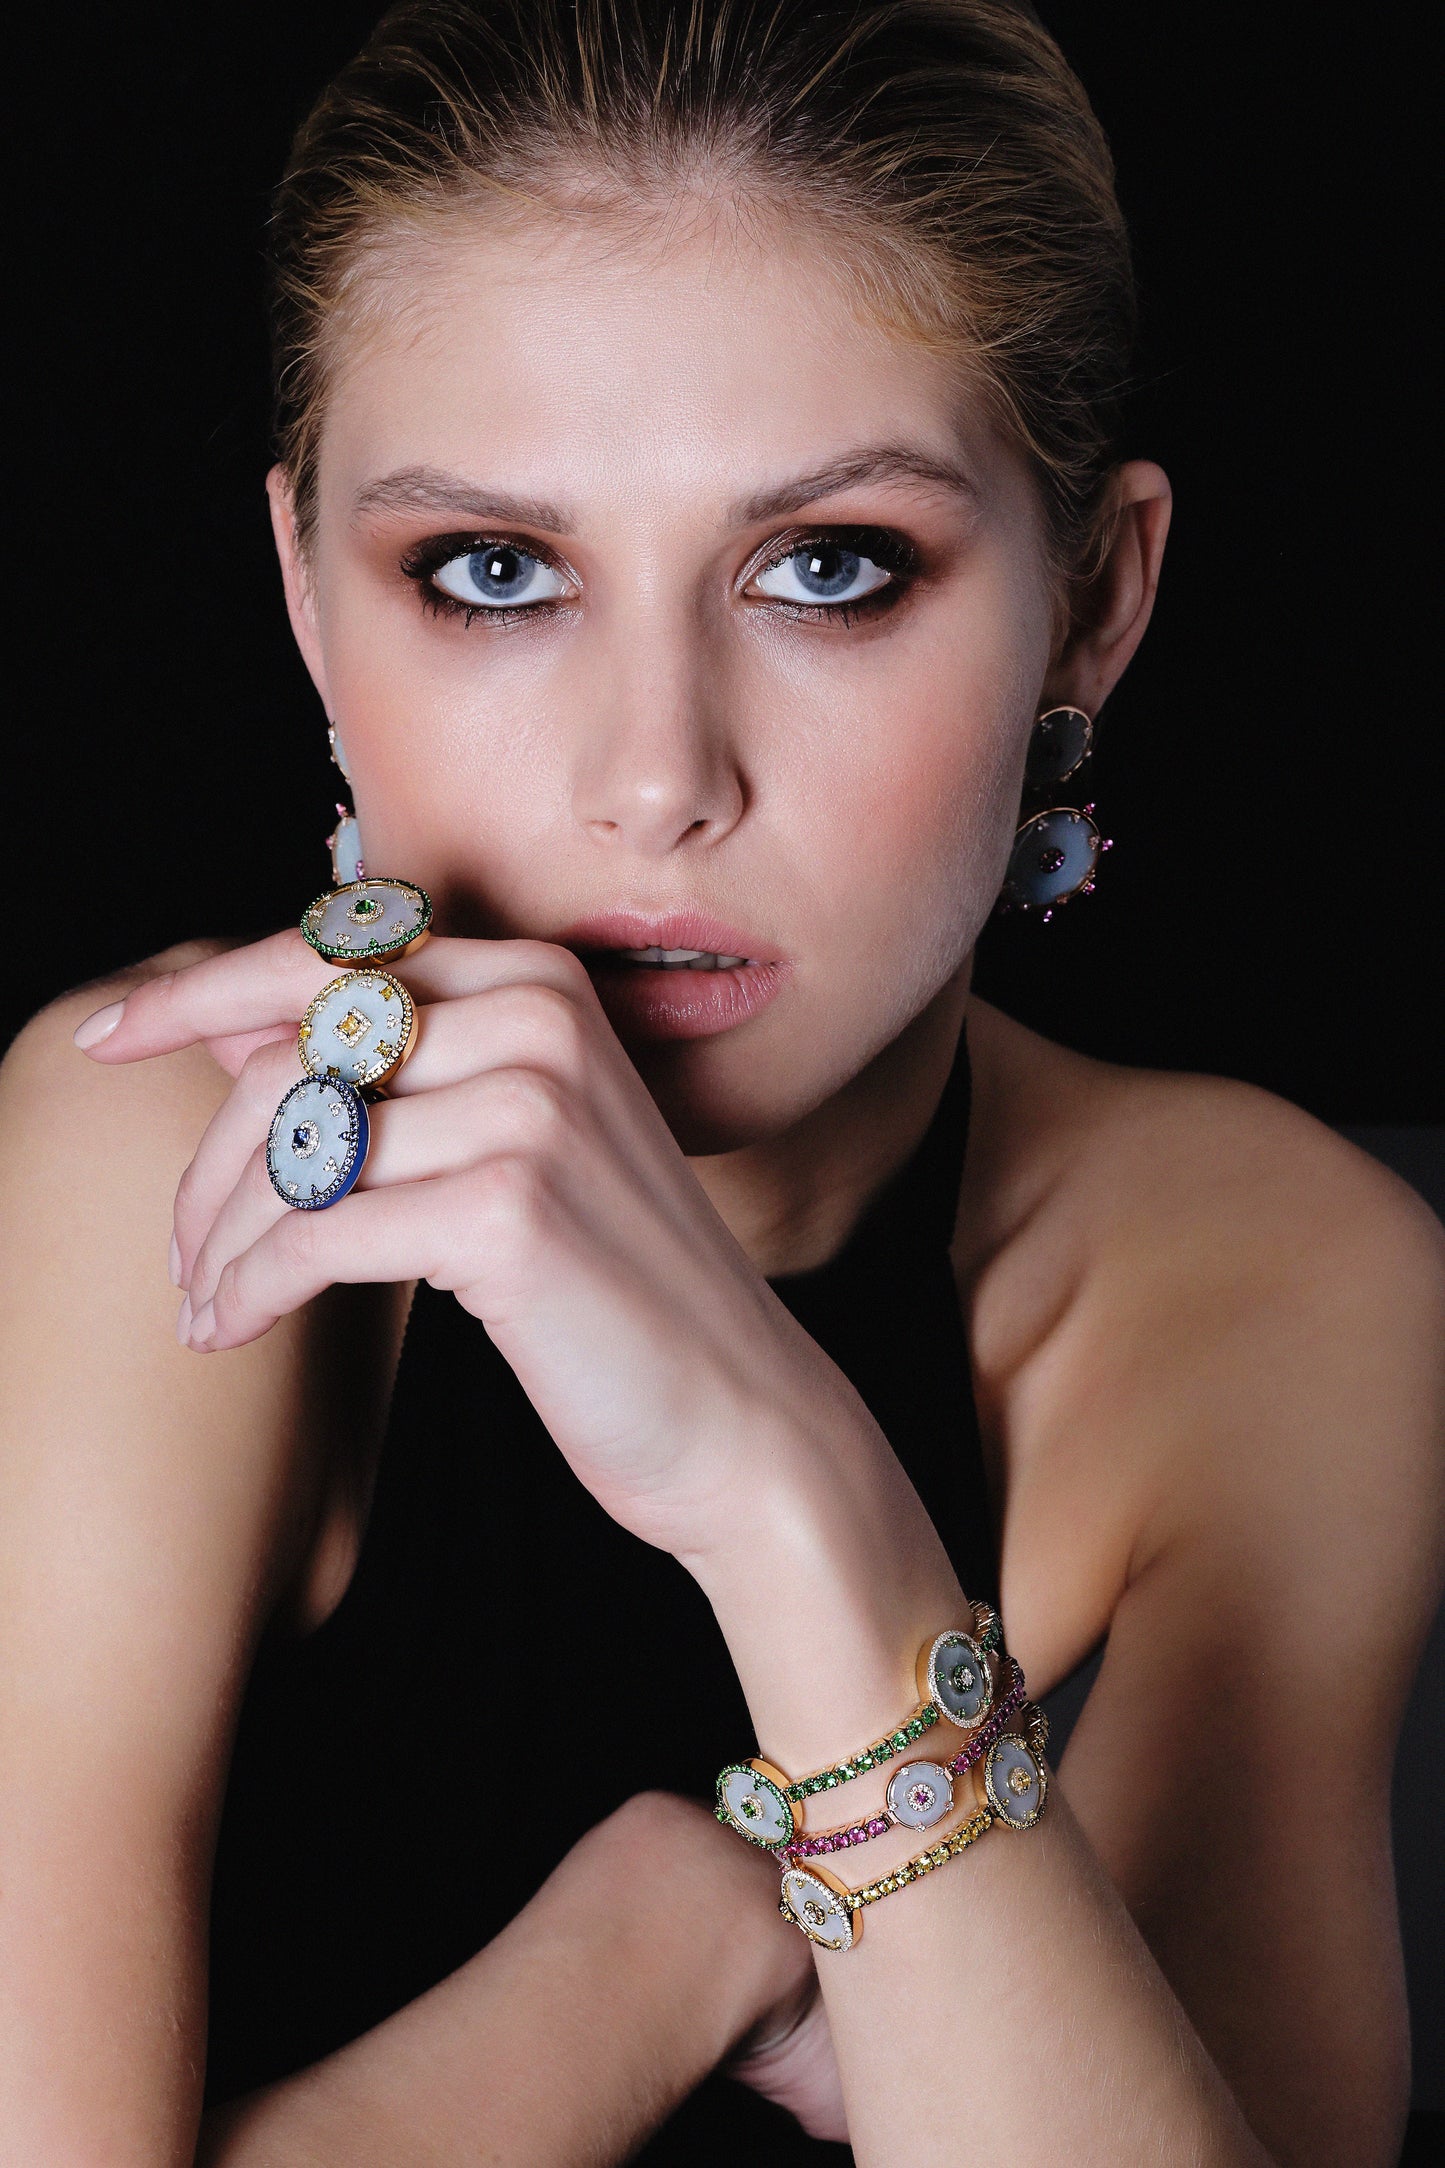 Celeste Yellow Sapphire & Jade Bracelet